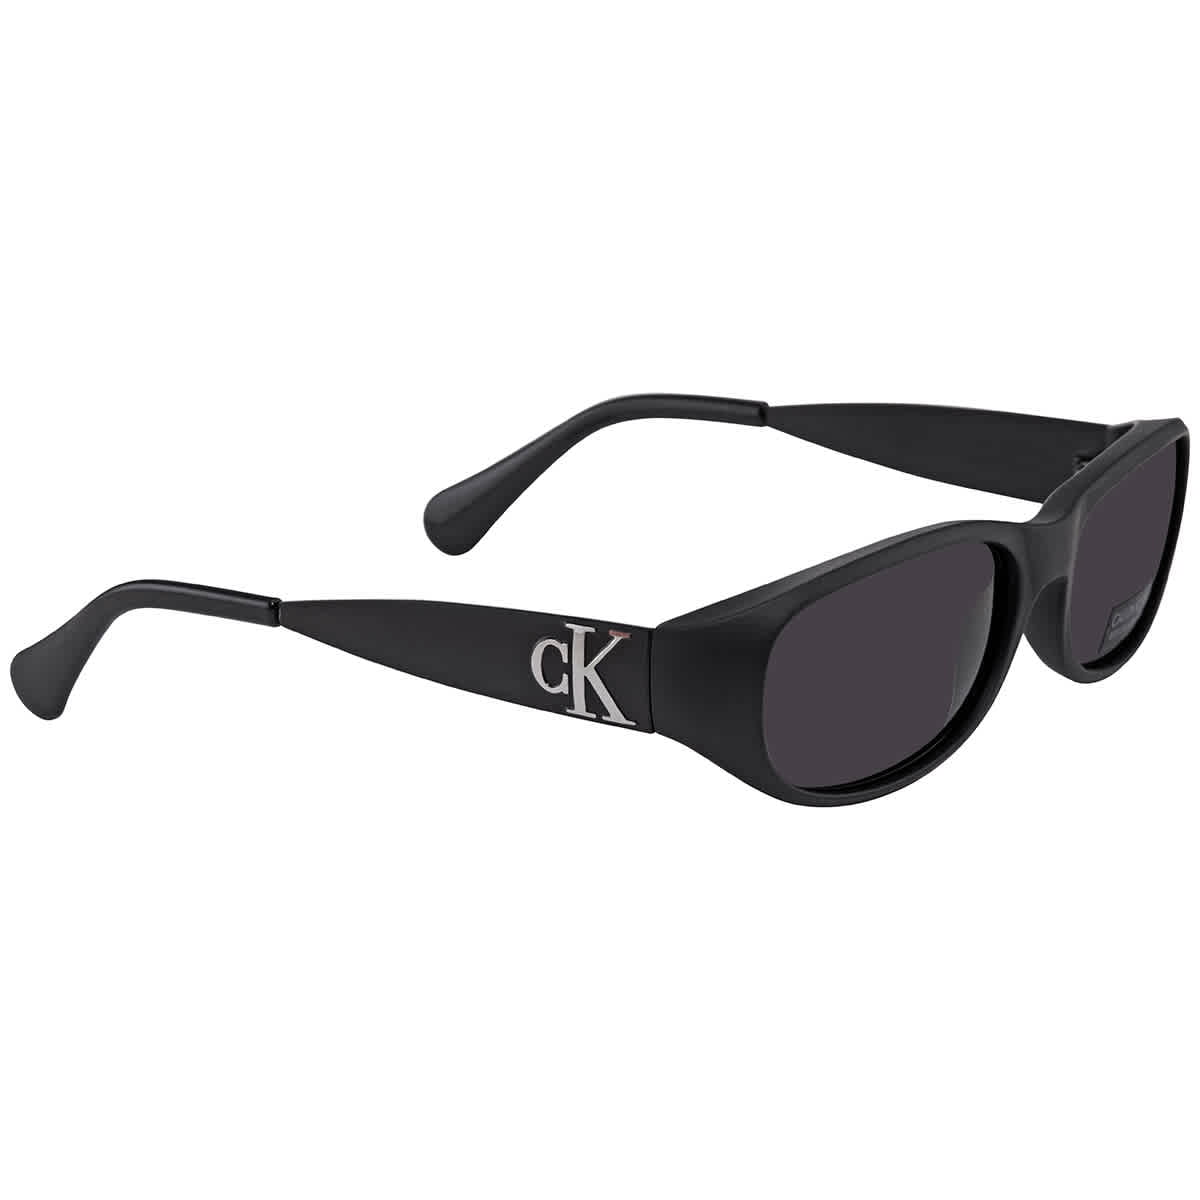 Calvin klein sunglasses. Calvin Klein Grey Oval Unisex Sunglasses ck20706sk 001 58. Calvin Klein Platinum Label Unisex Sunglasses.